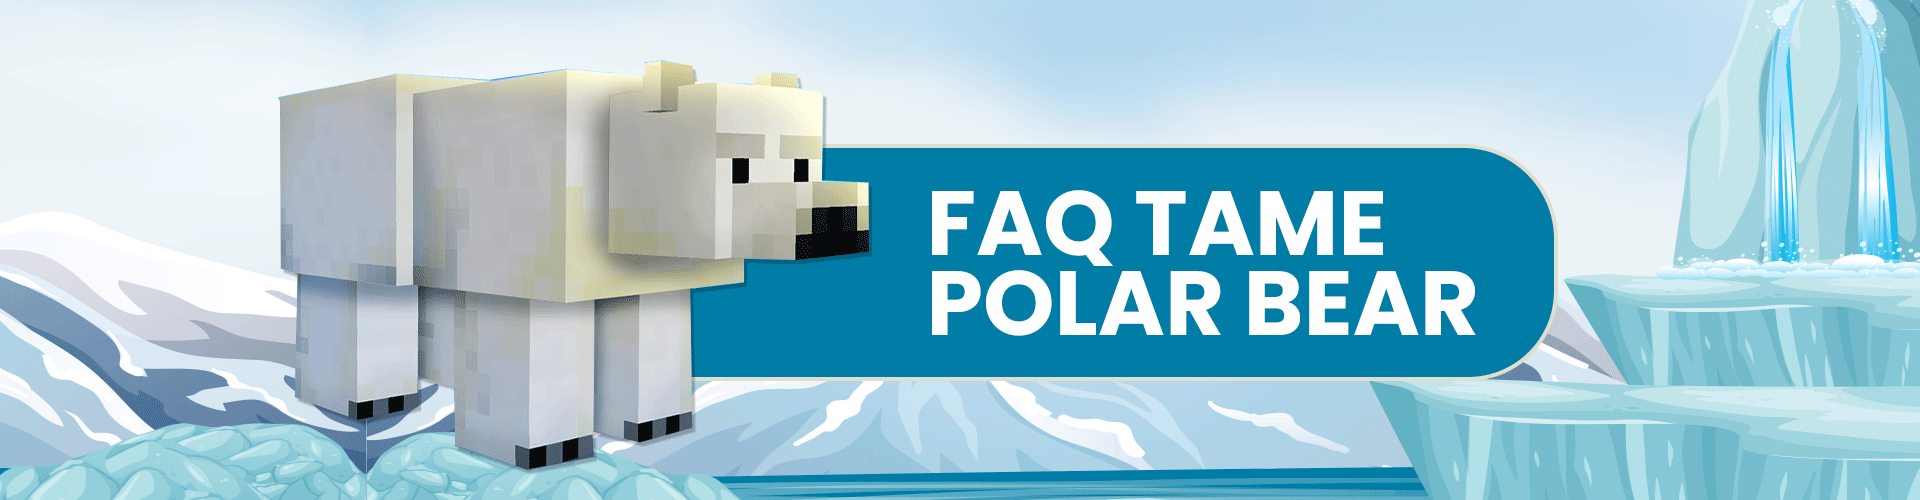 Top 10 FAQs on Polar Bear in Minecraft